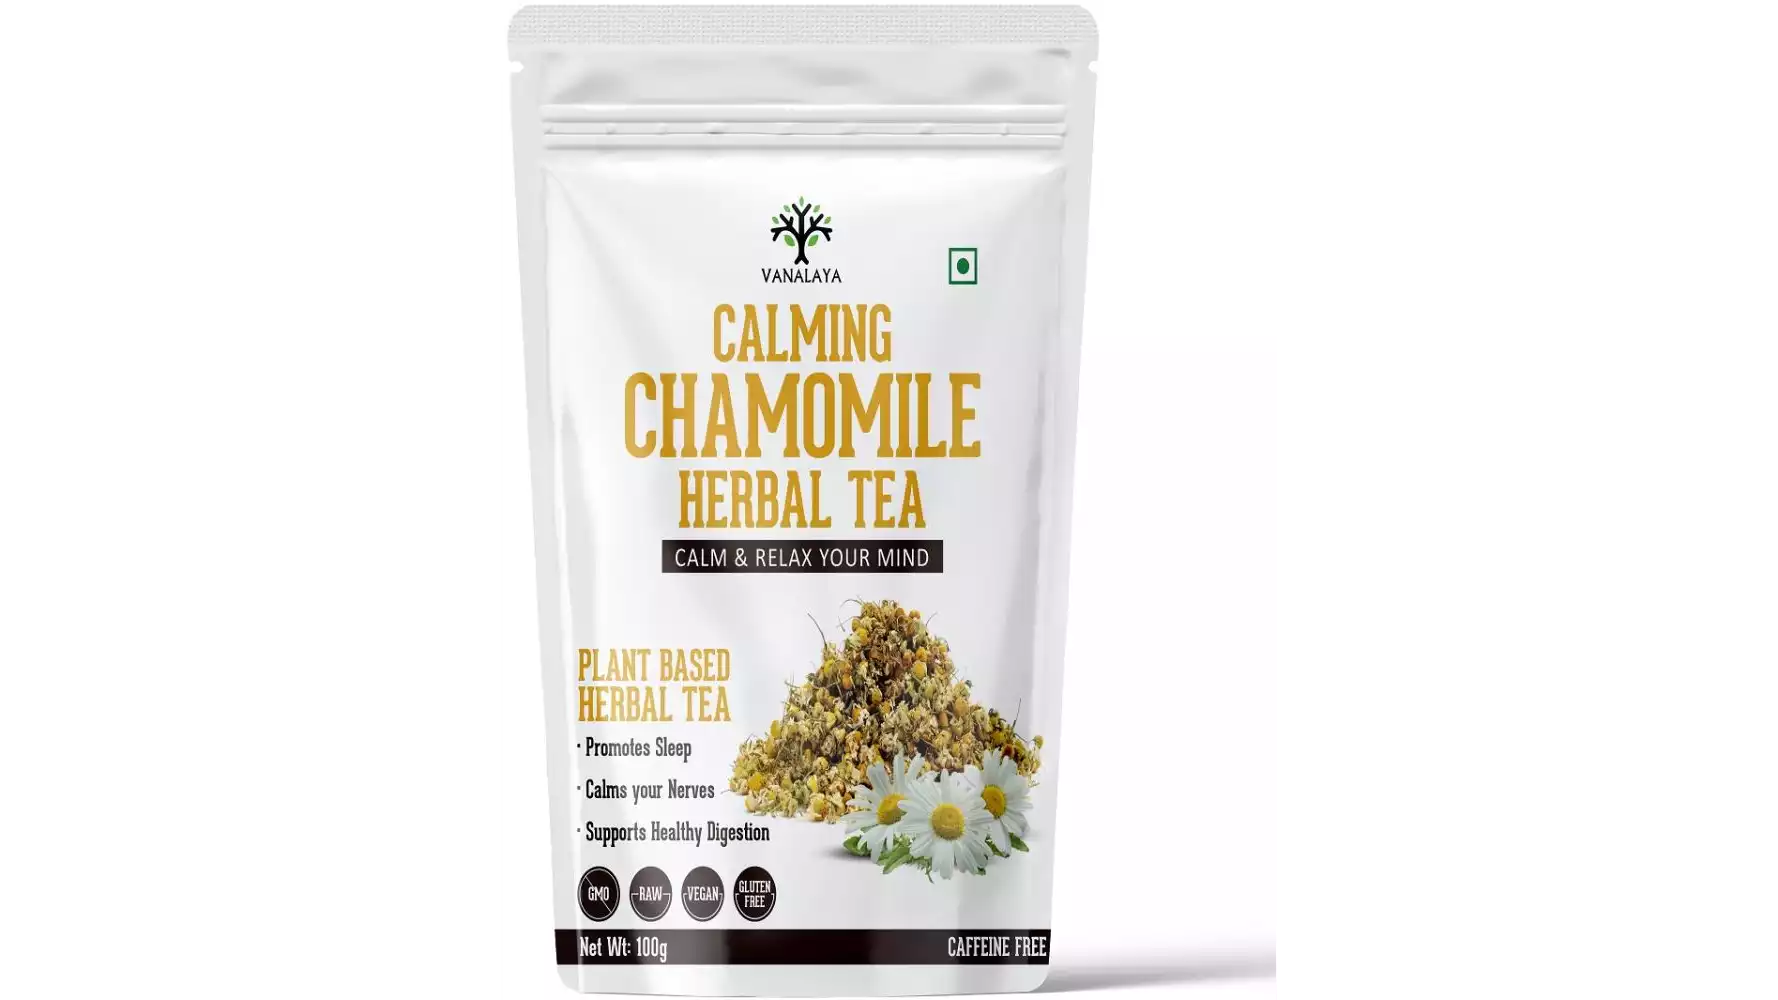 Vanalaya Calming Chamomile Herbal Tea (100g)